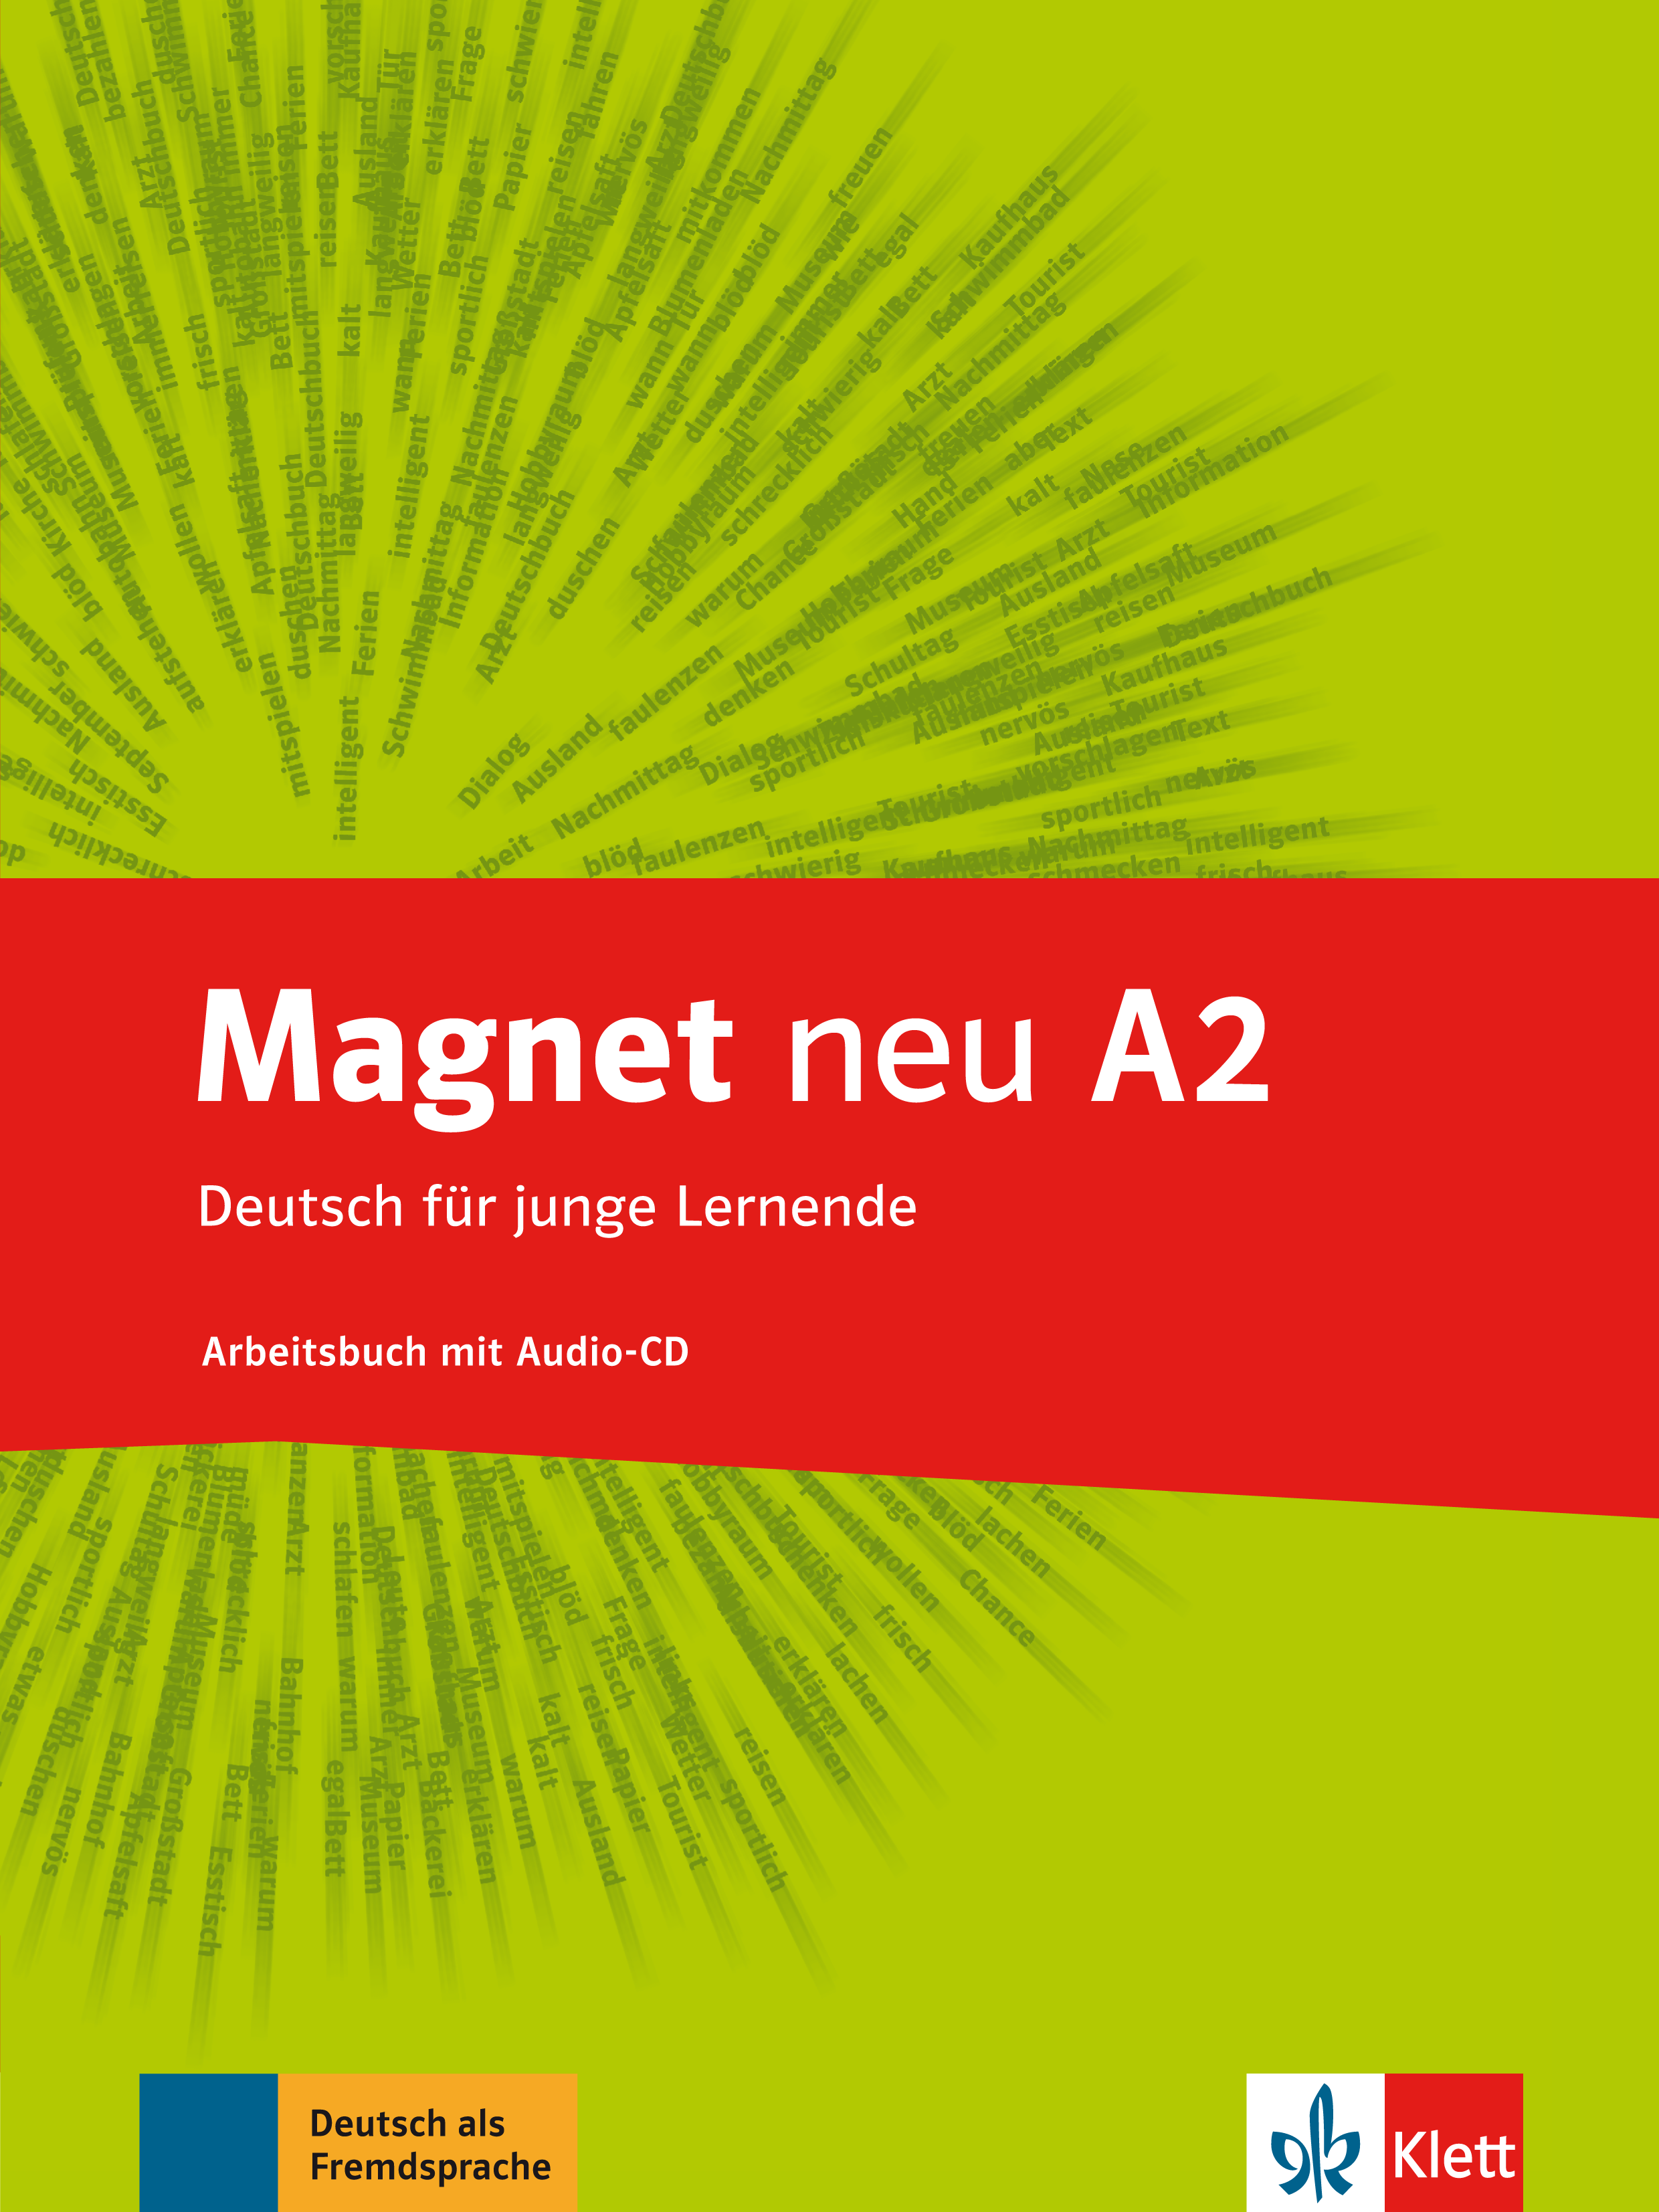 Magnet neu A2.2 interaktives Arbeitsbuch